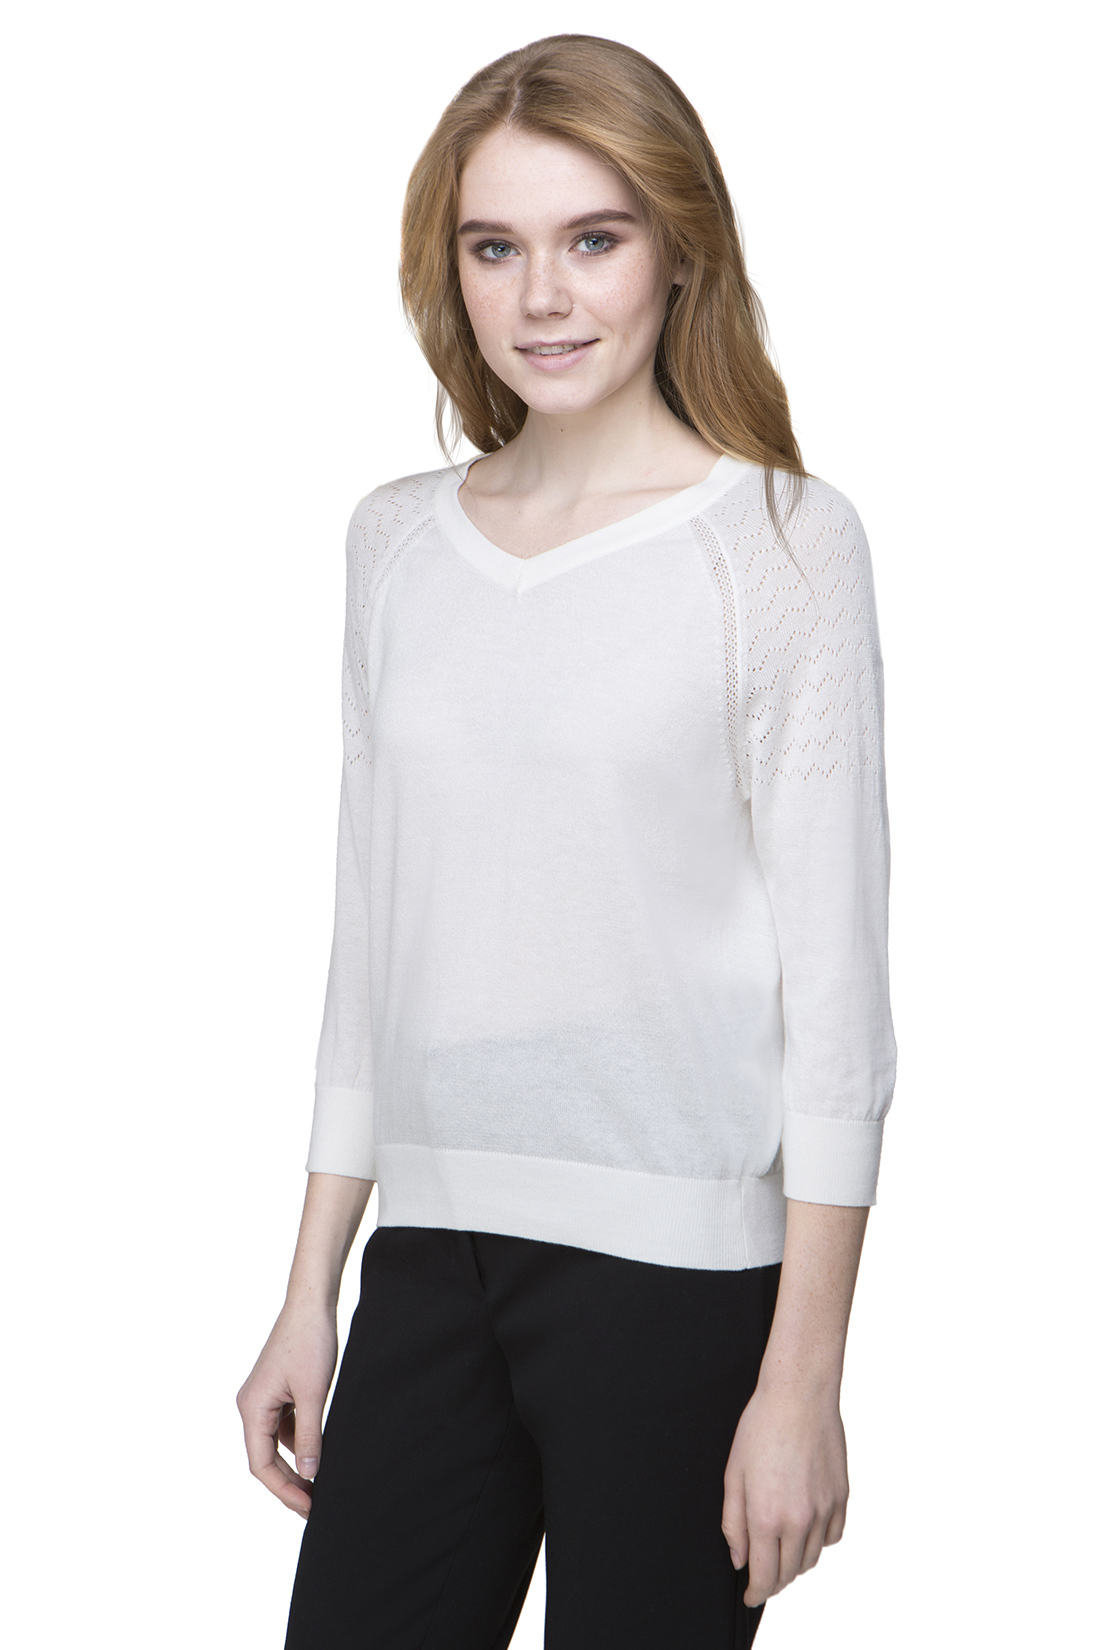 Пуловер с ажурными рукавами (арт. baon B137007), размер XS, цвет белый Пуловер с ажурными рукавами (арт. baon B137007) - фото 1